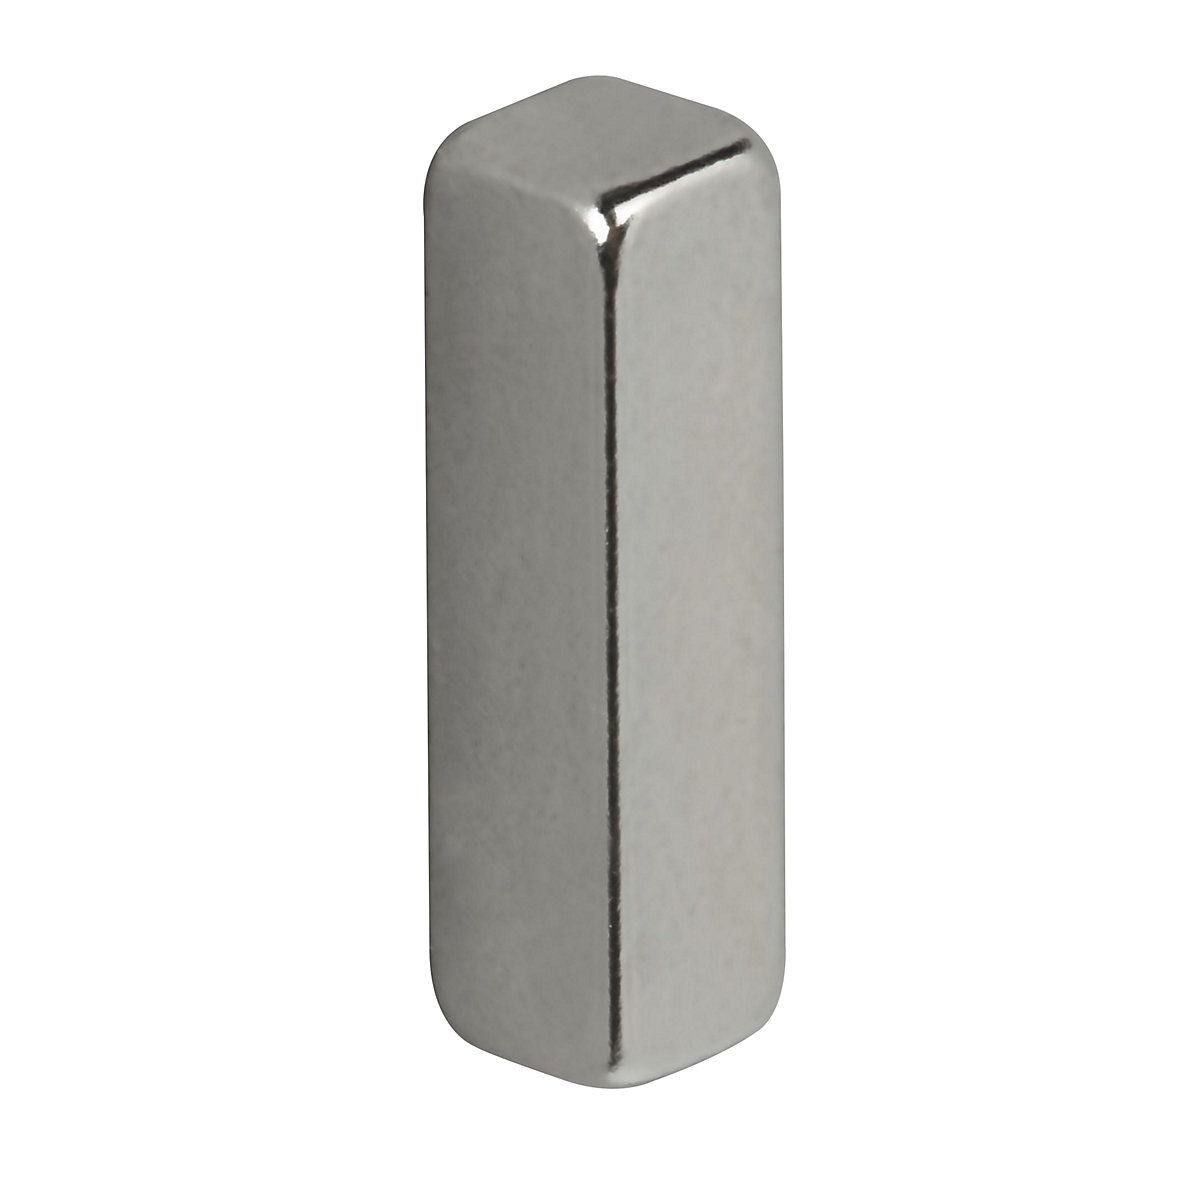 Neodymium rod magnet – MAUL: pack of 40